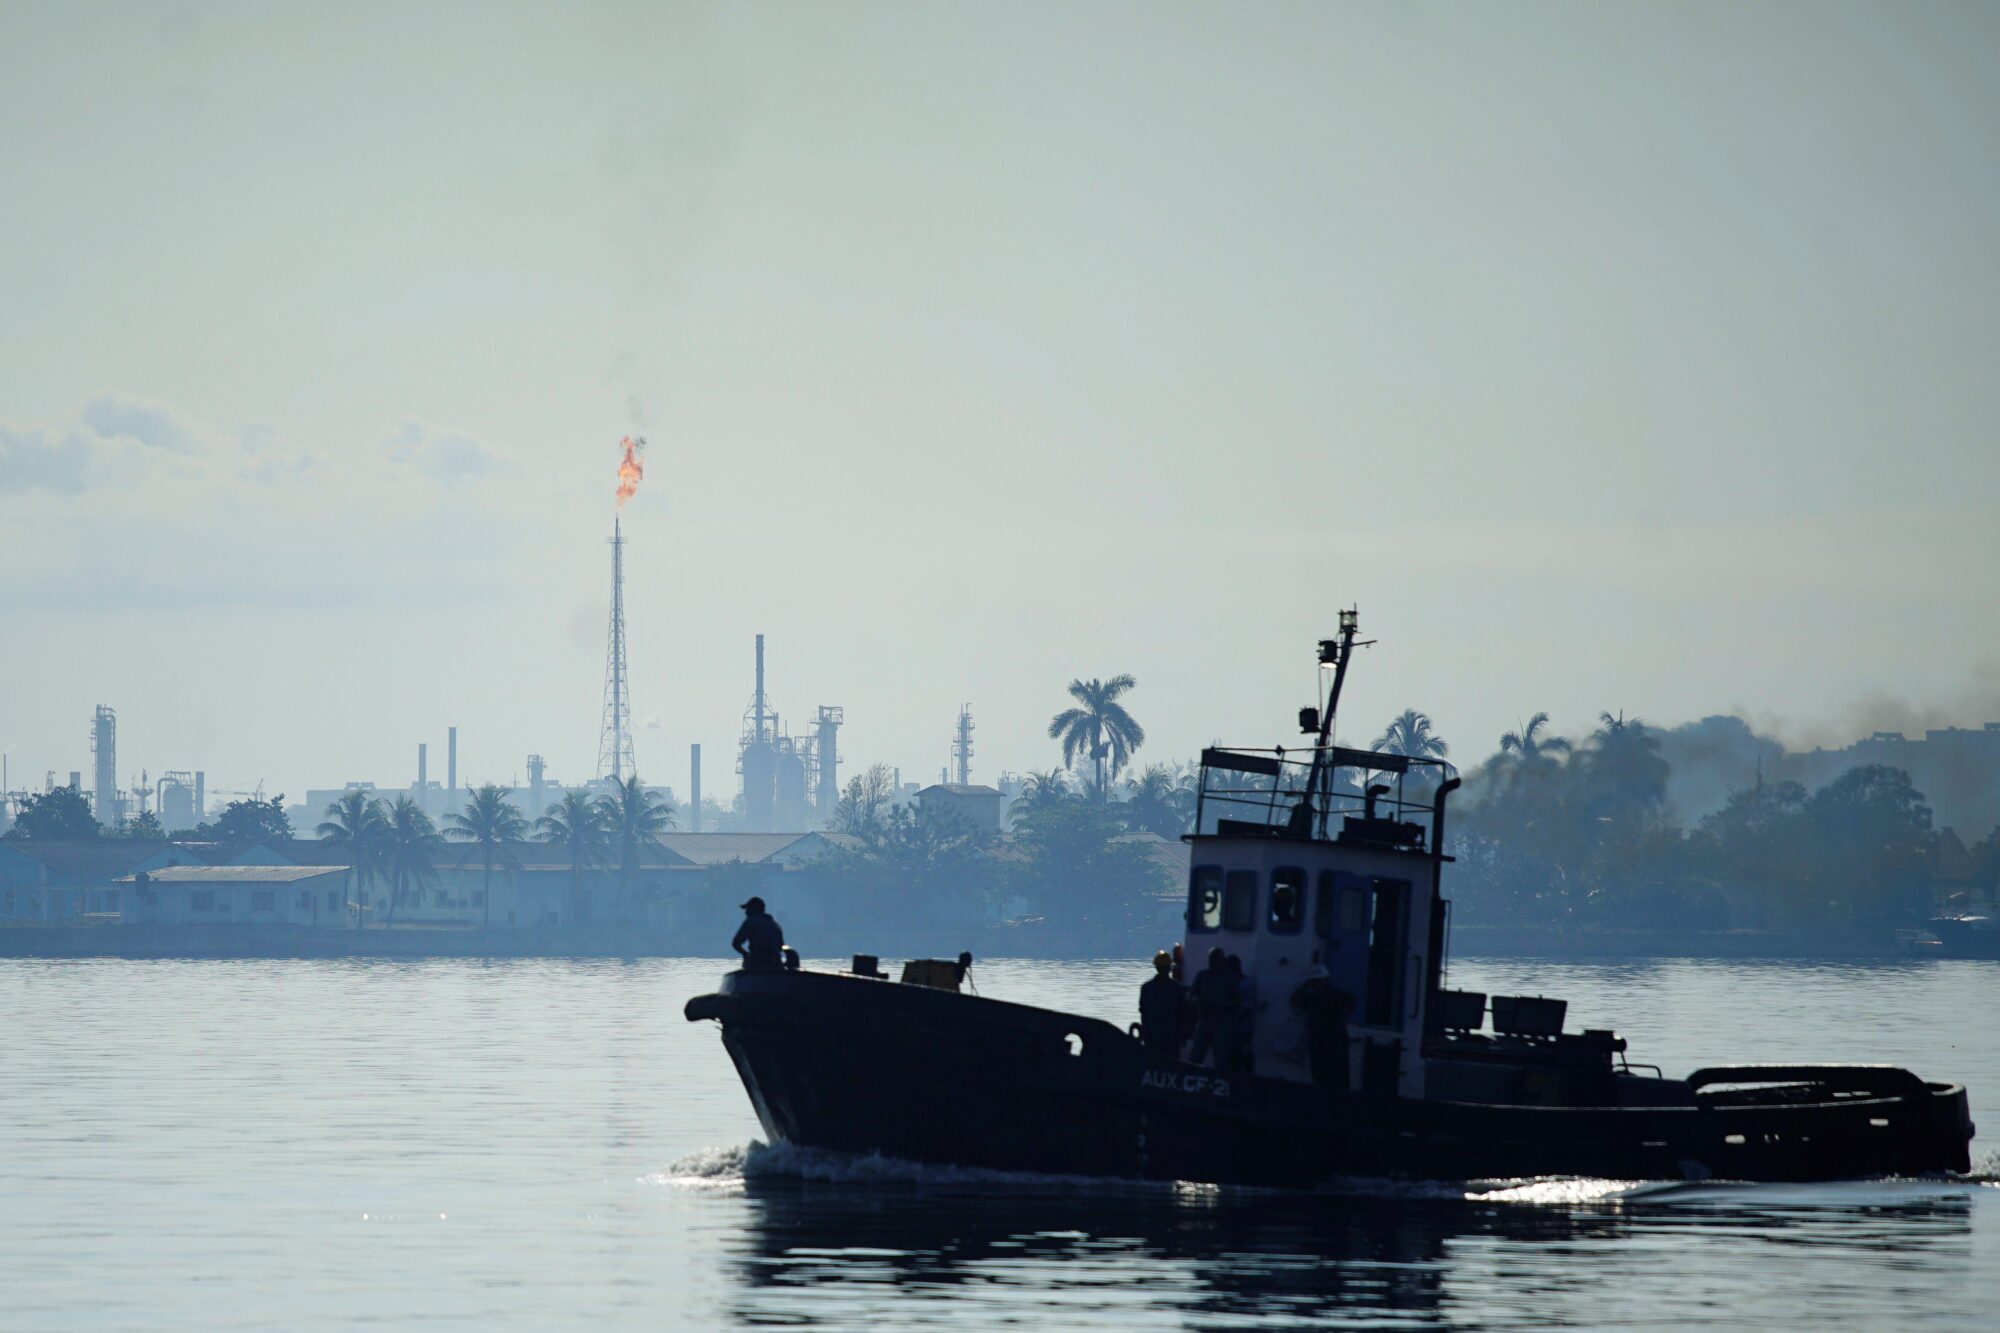 A boat passes the Nico López oil refinery in the Havana bay, Cuba